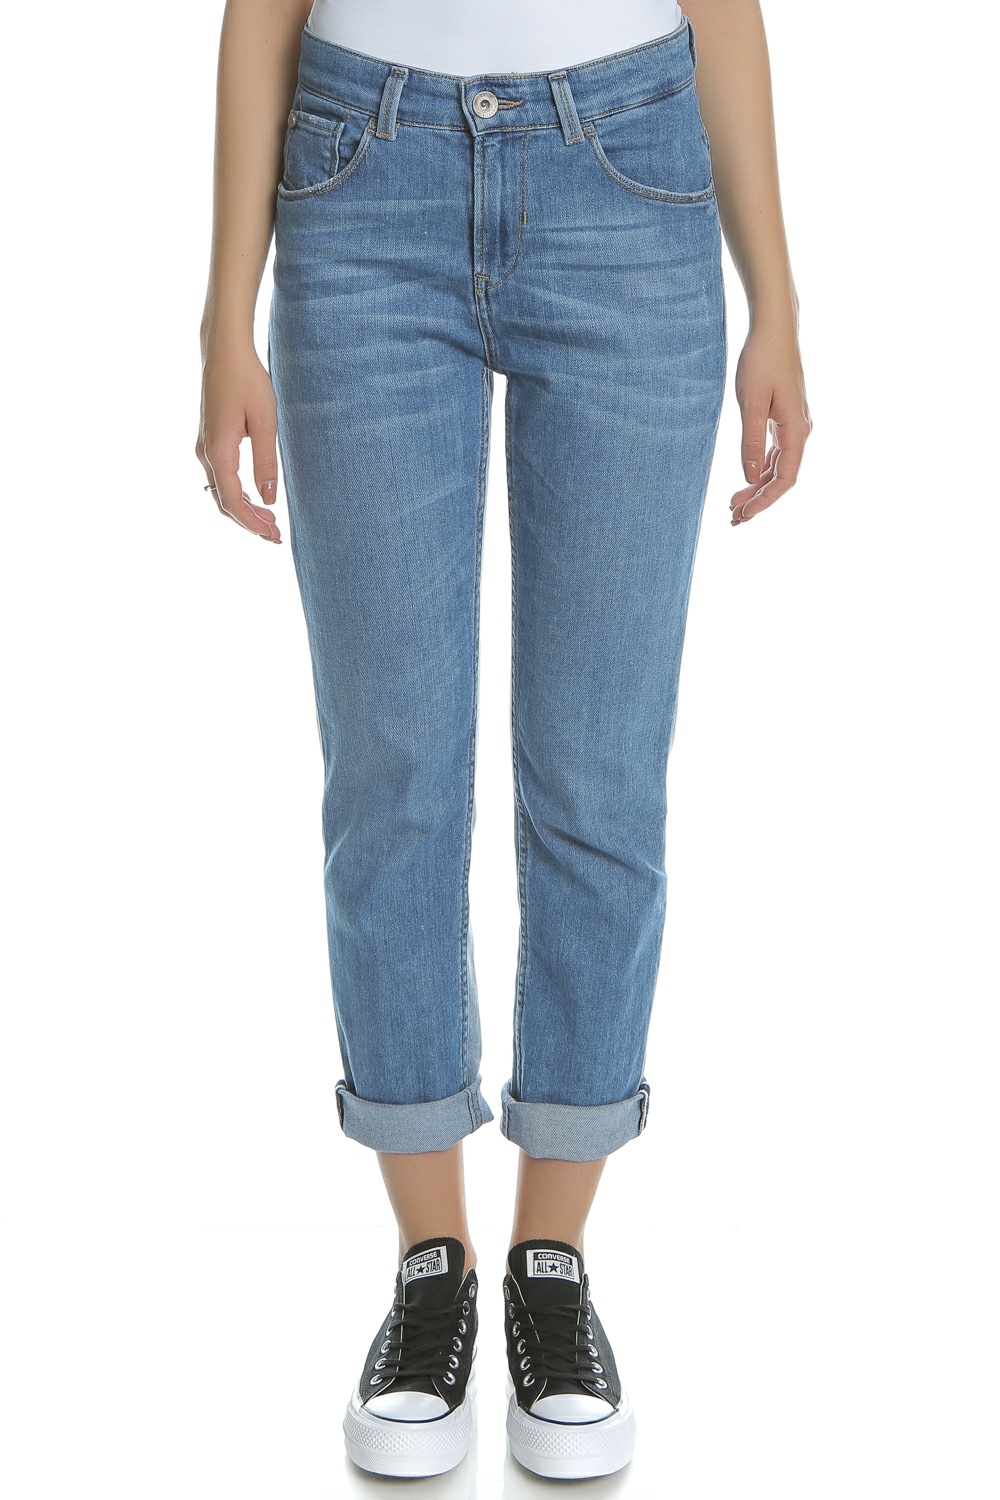 GARCIA JEANS - Γυναικείο τζιν παντελόνι Garcia Jeans δίχρωμο Γυναικεία/Ρούχα/Τζίν/Straight